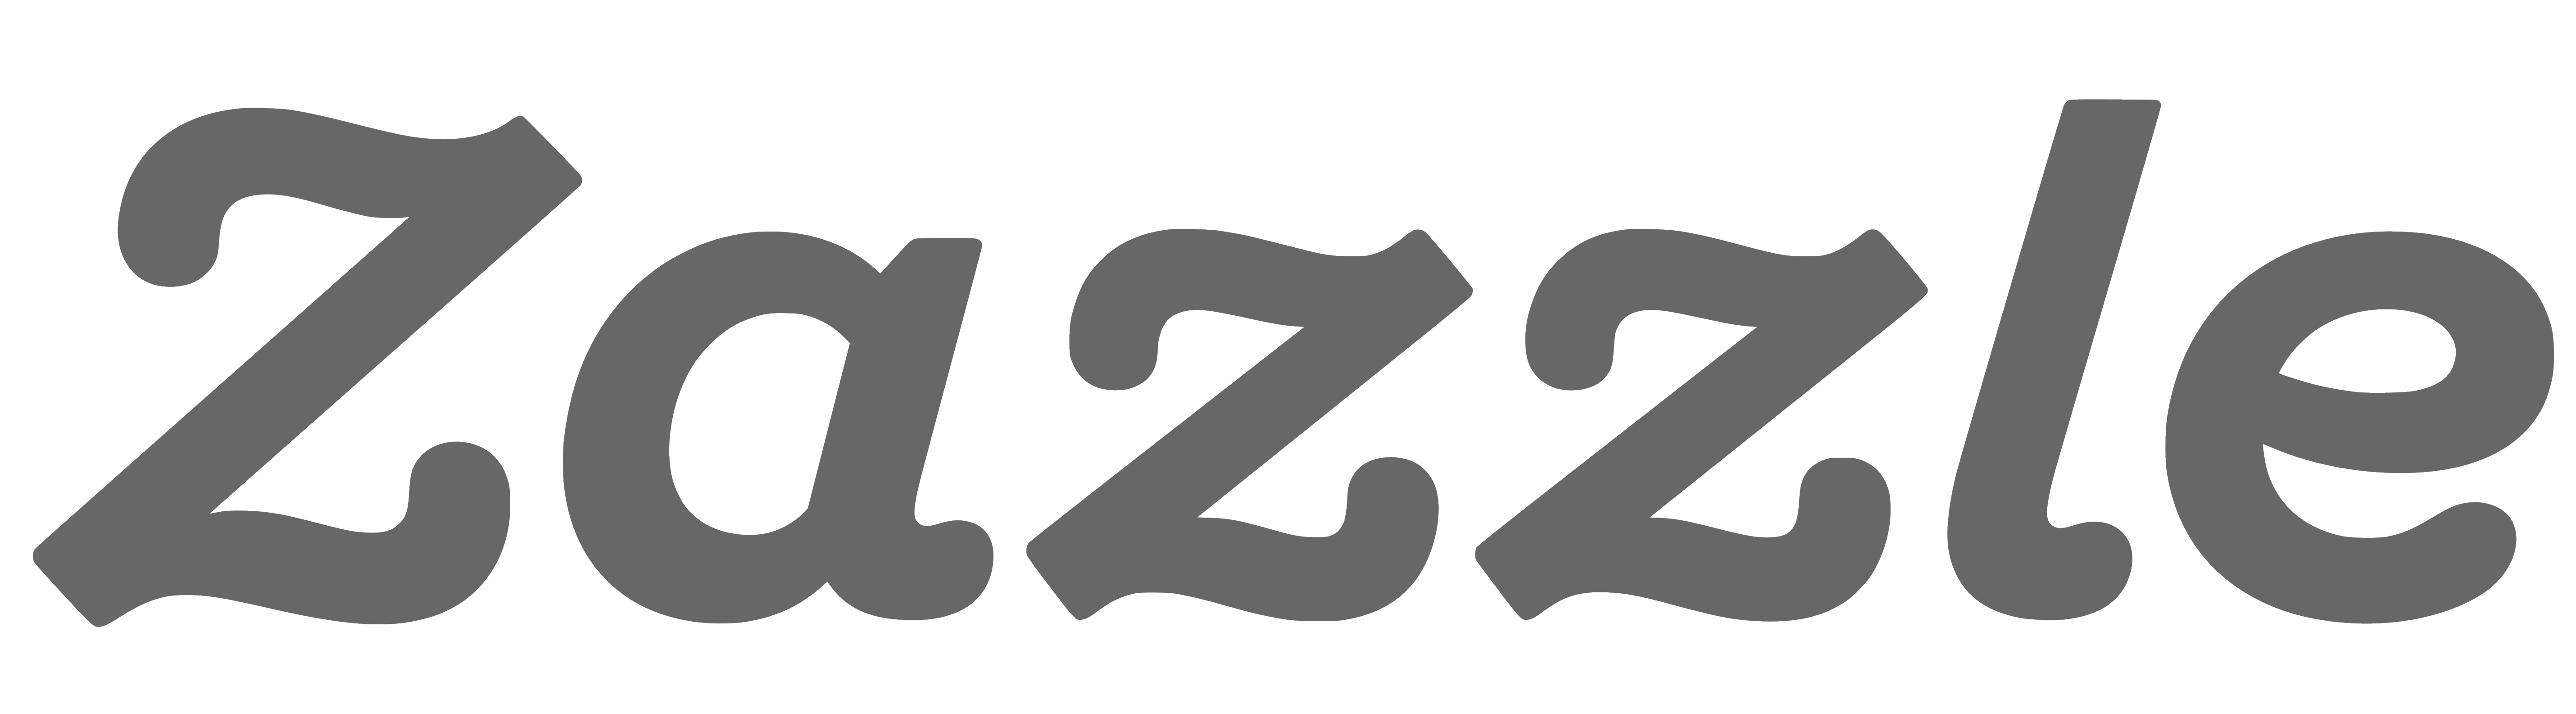 Zazzle logo, logotype